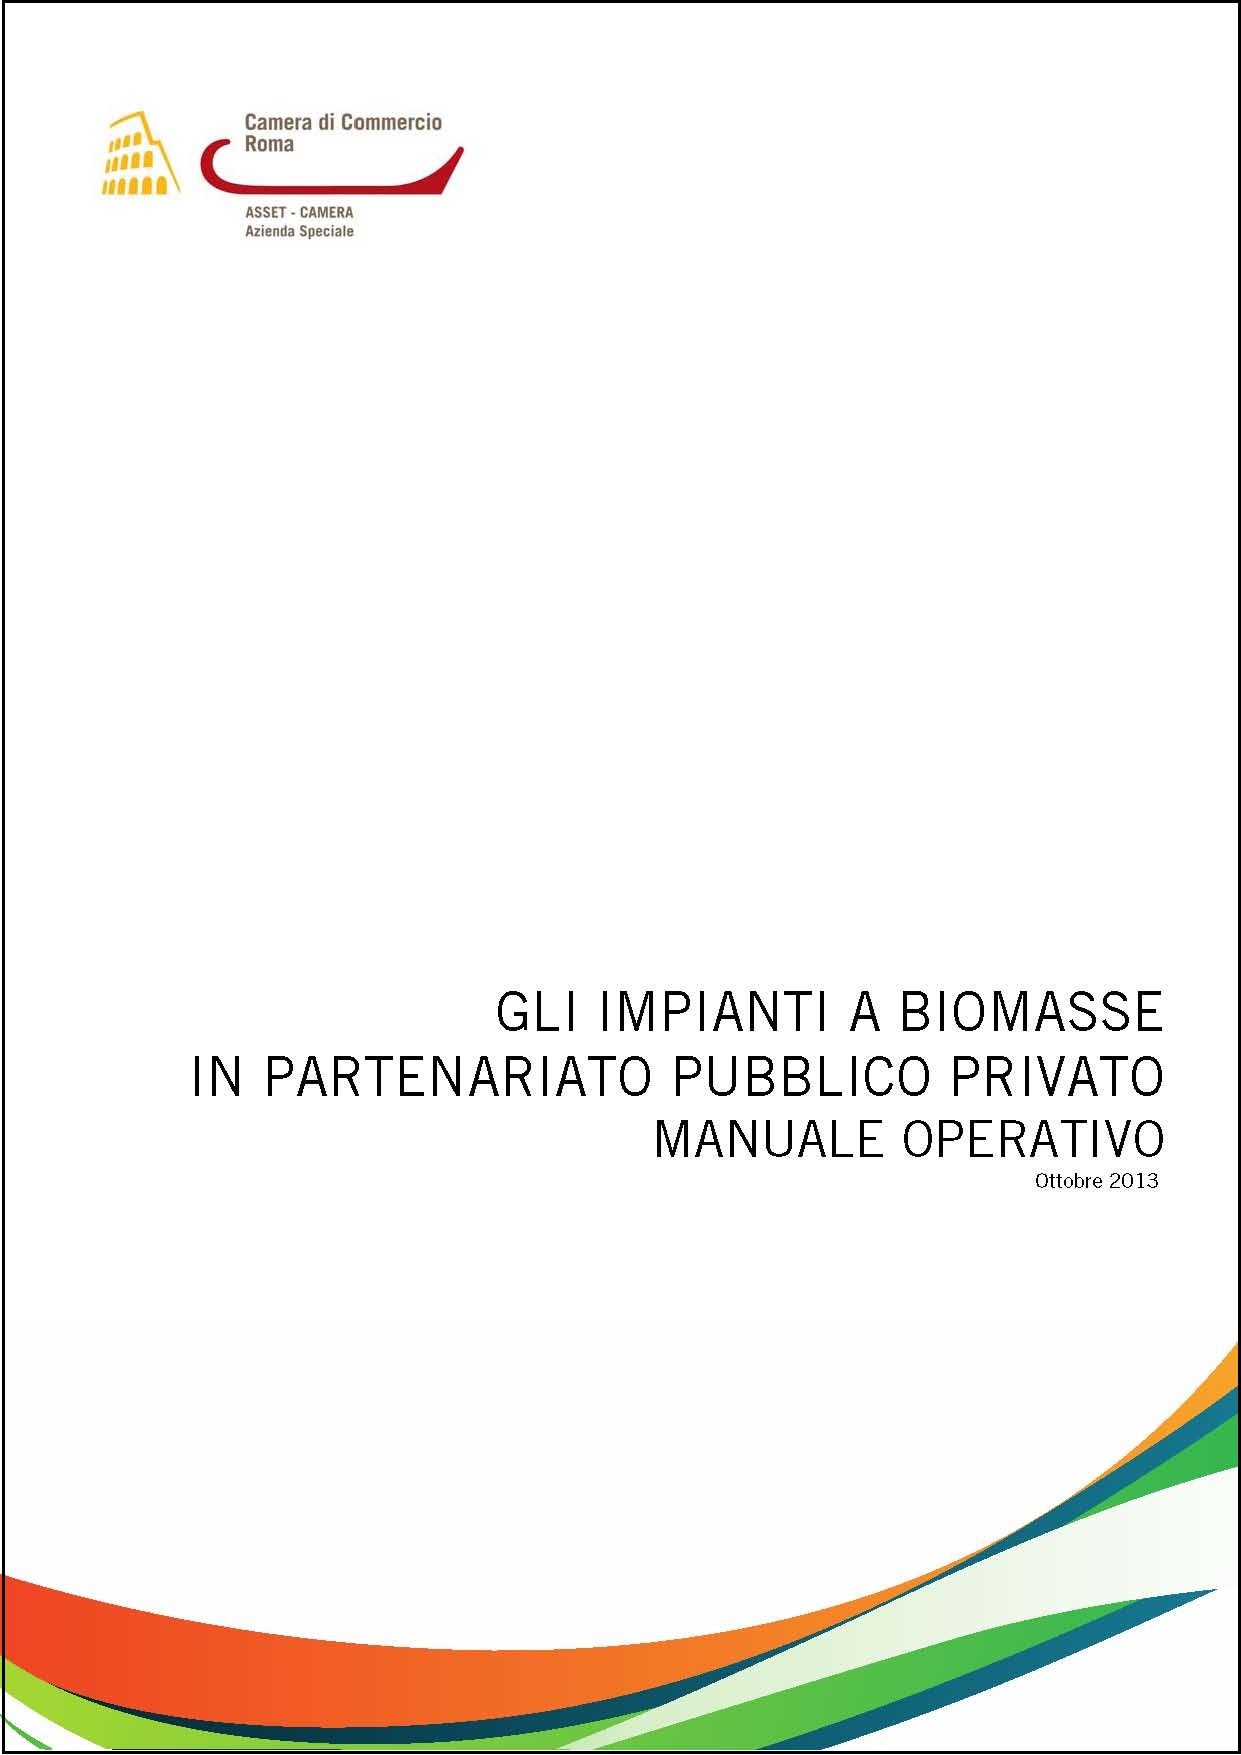 copertina manuale PPP Biomasse